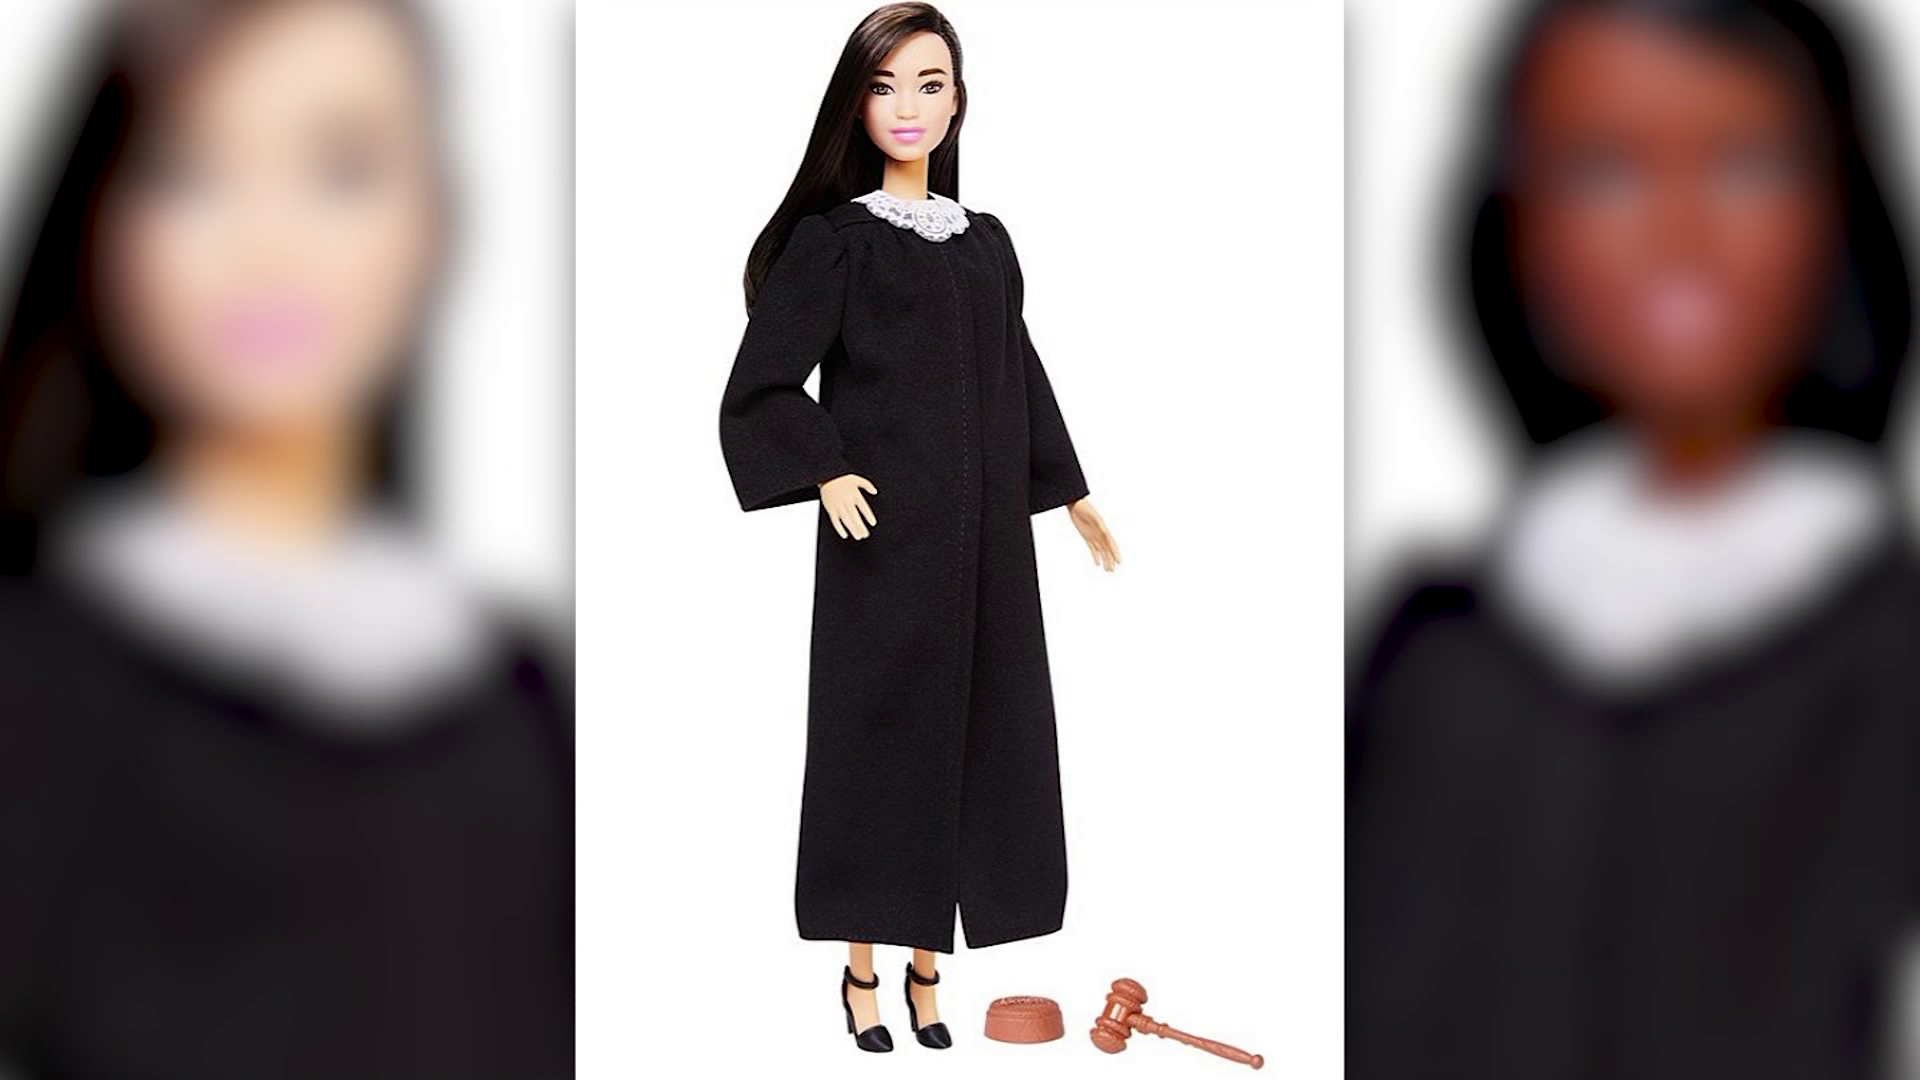 Mattel introduces Barbie' doll